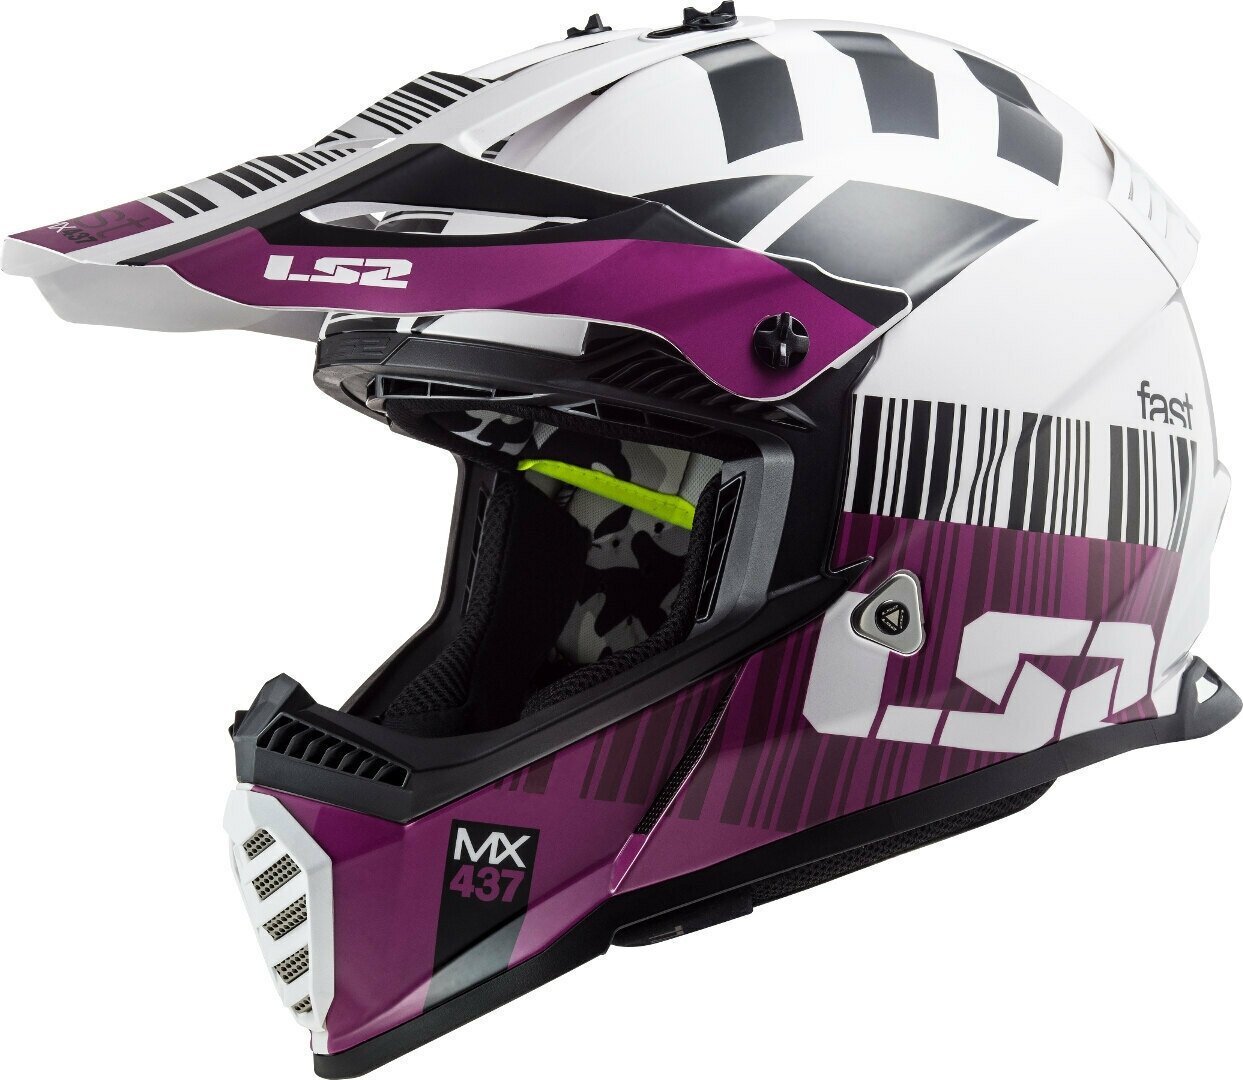 Мотошлем MX437 FAST XCODE LS2 бело-фиолетовый, L